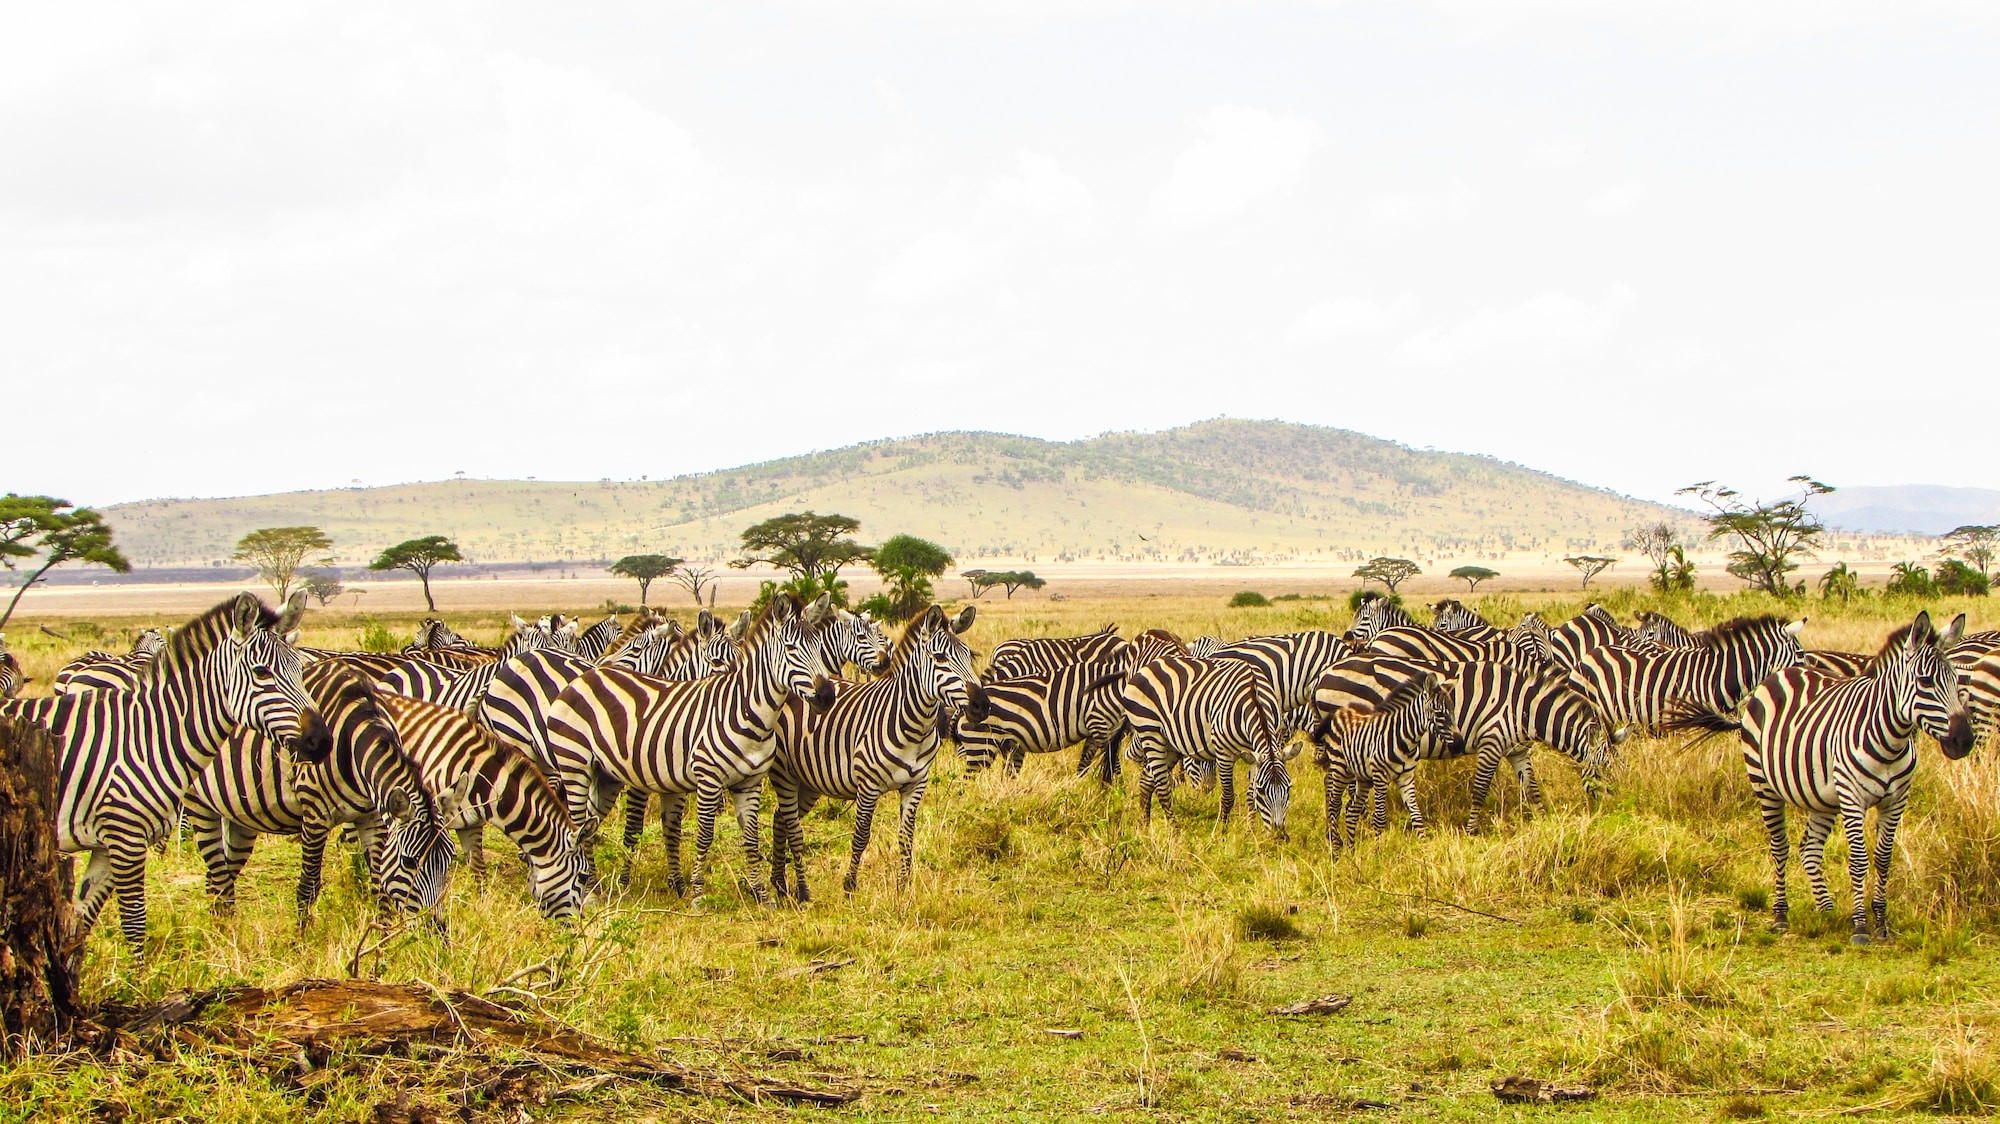 A Group Of Zebras In A Field